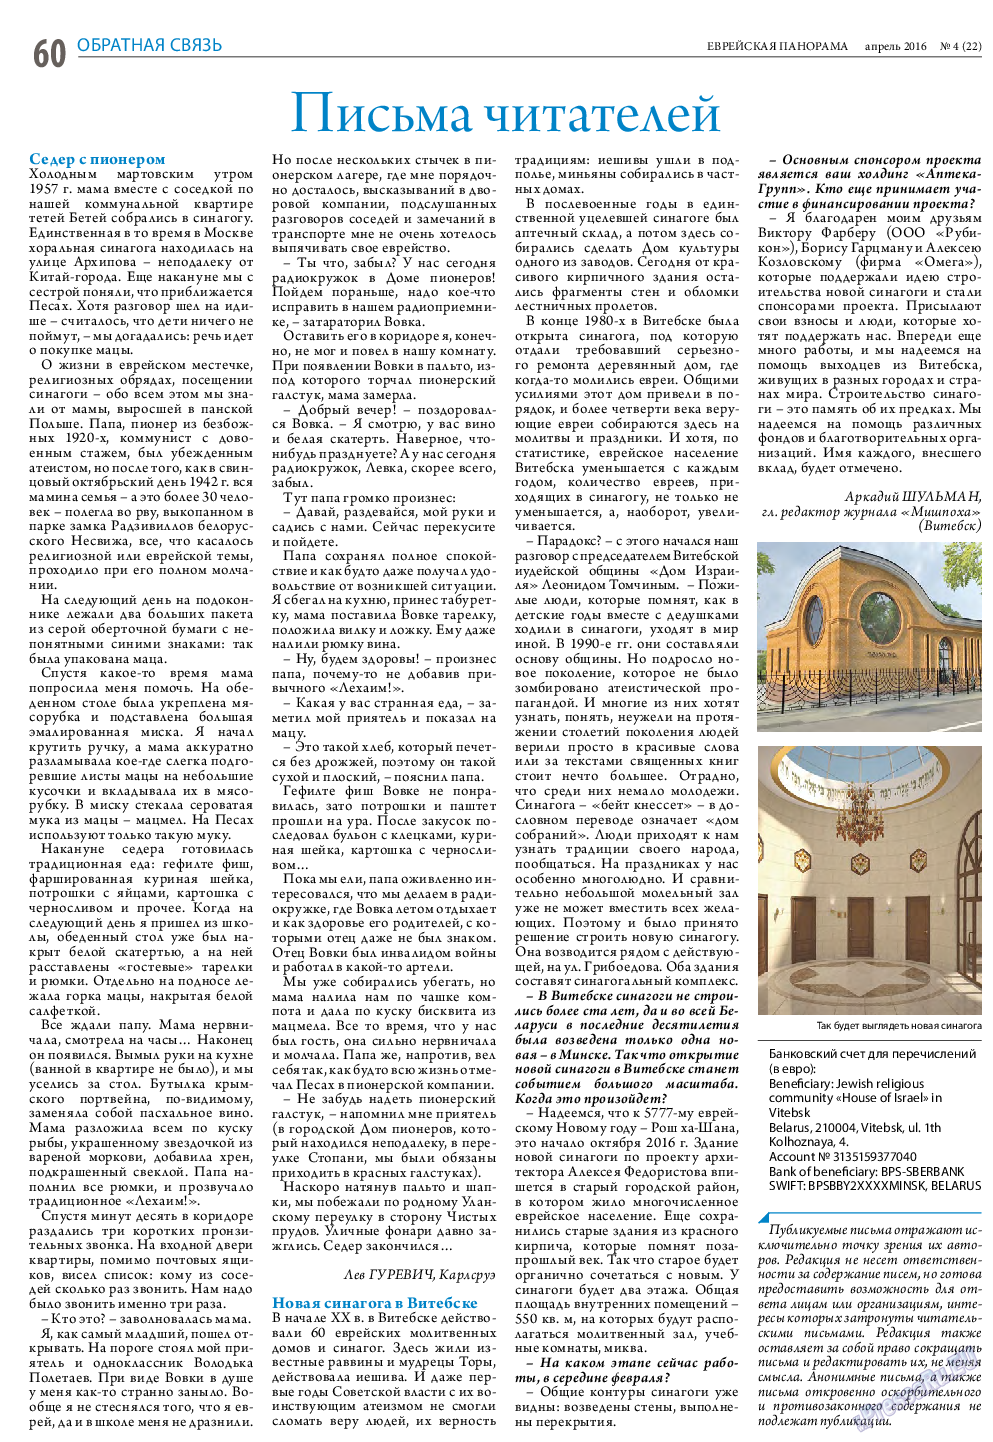 Еврейская панорама, газета. 2016 №4 стр.60